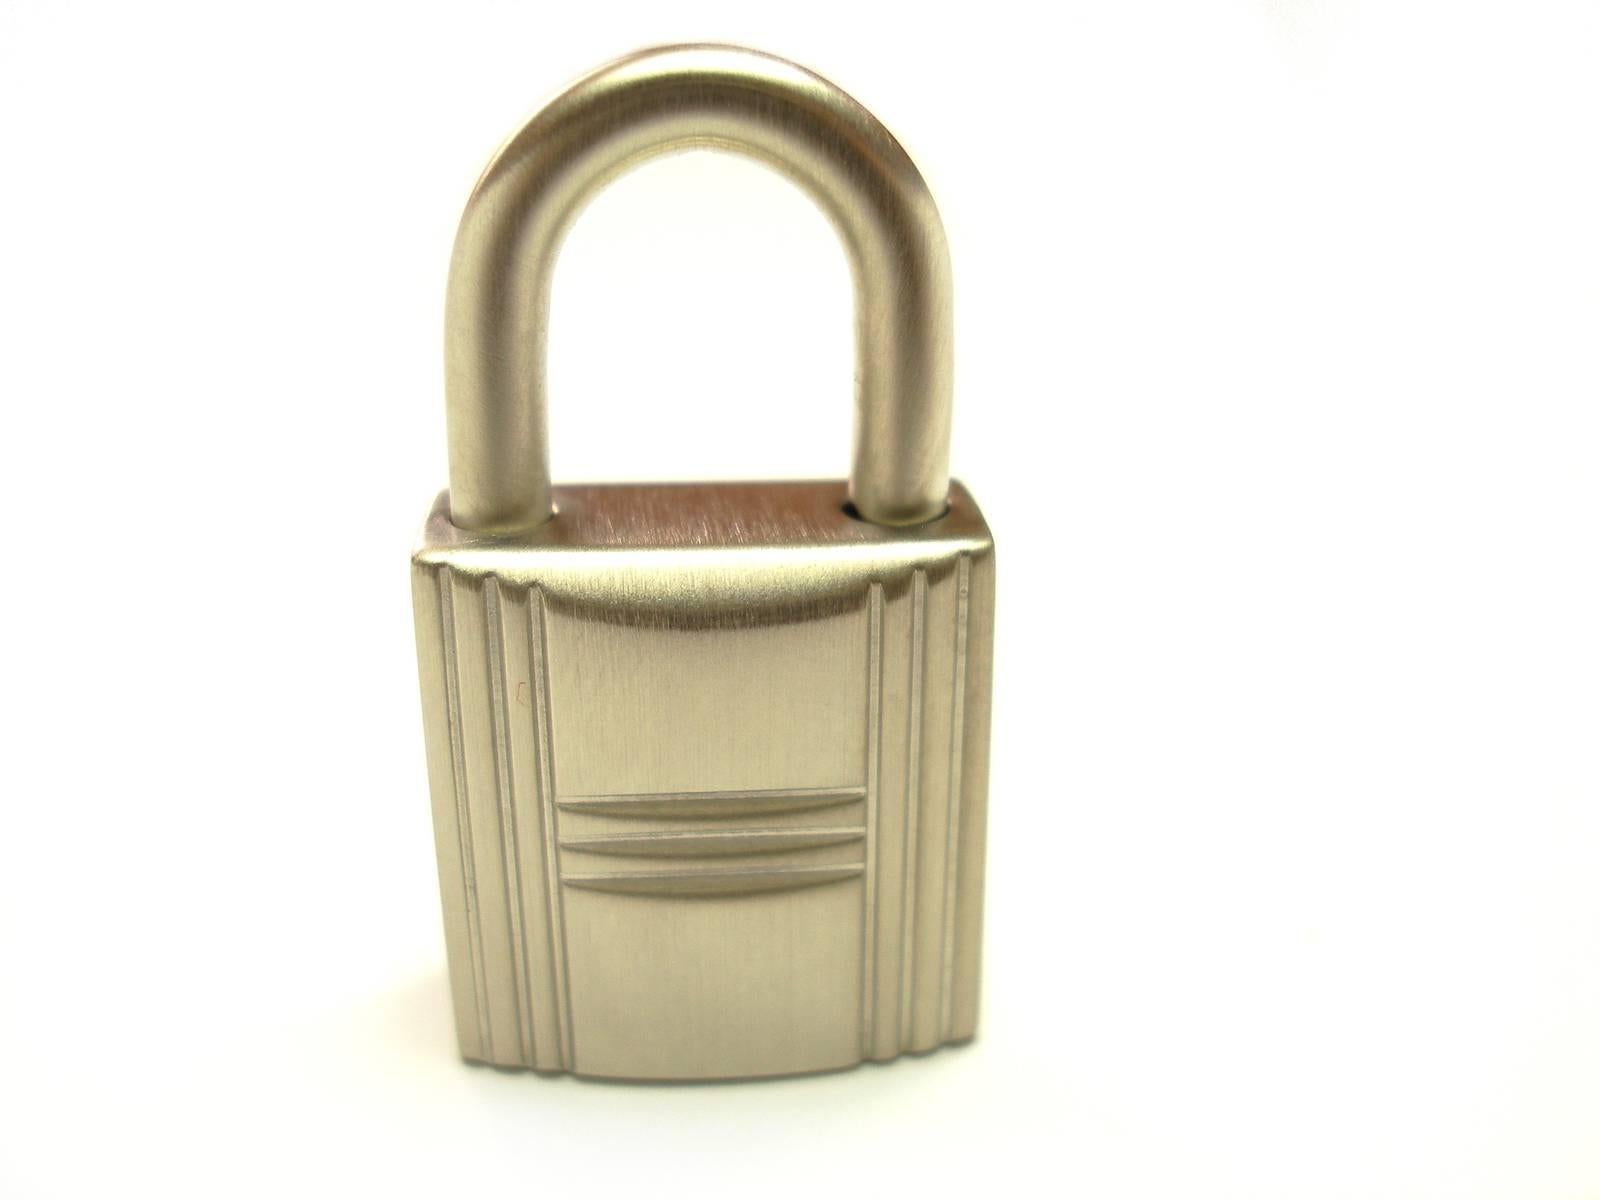 Hermès Cadenas Lock & 2 Keys For Birkin or Kelly bag Brush Finish/ BRAND NEW 4